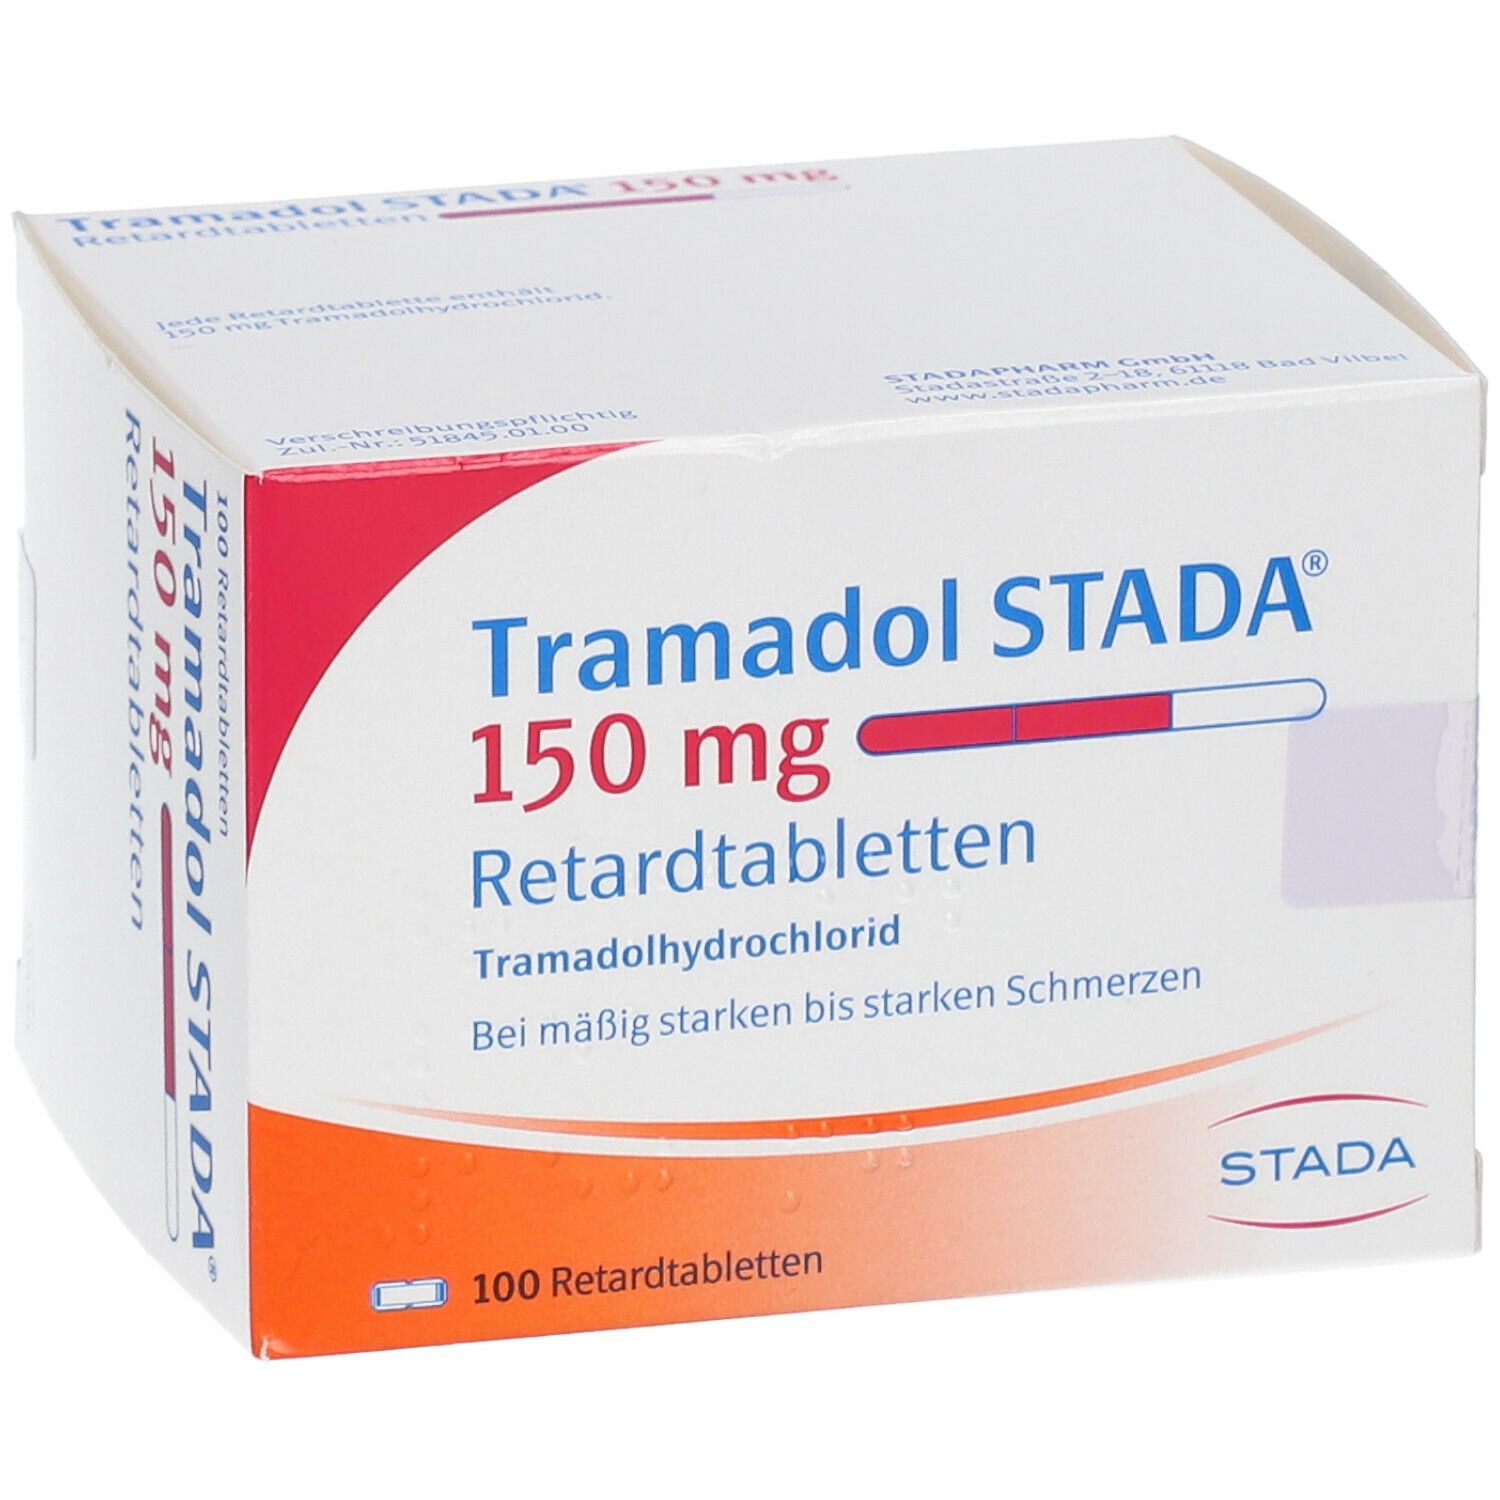 Tramadol STADA® 150 mg